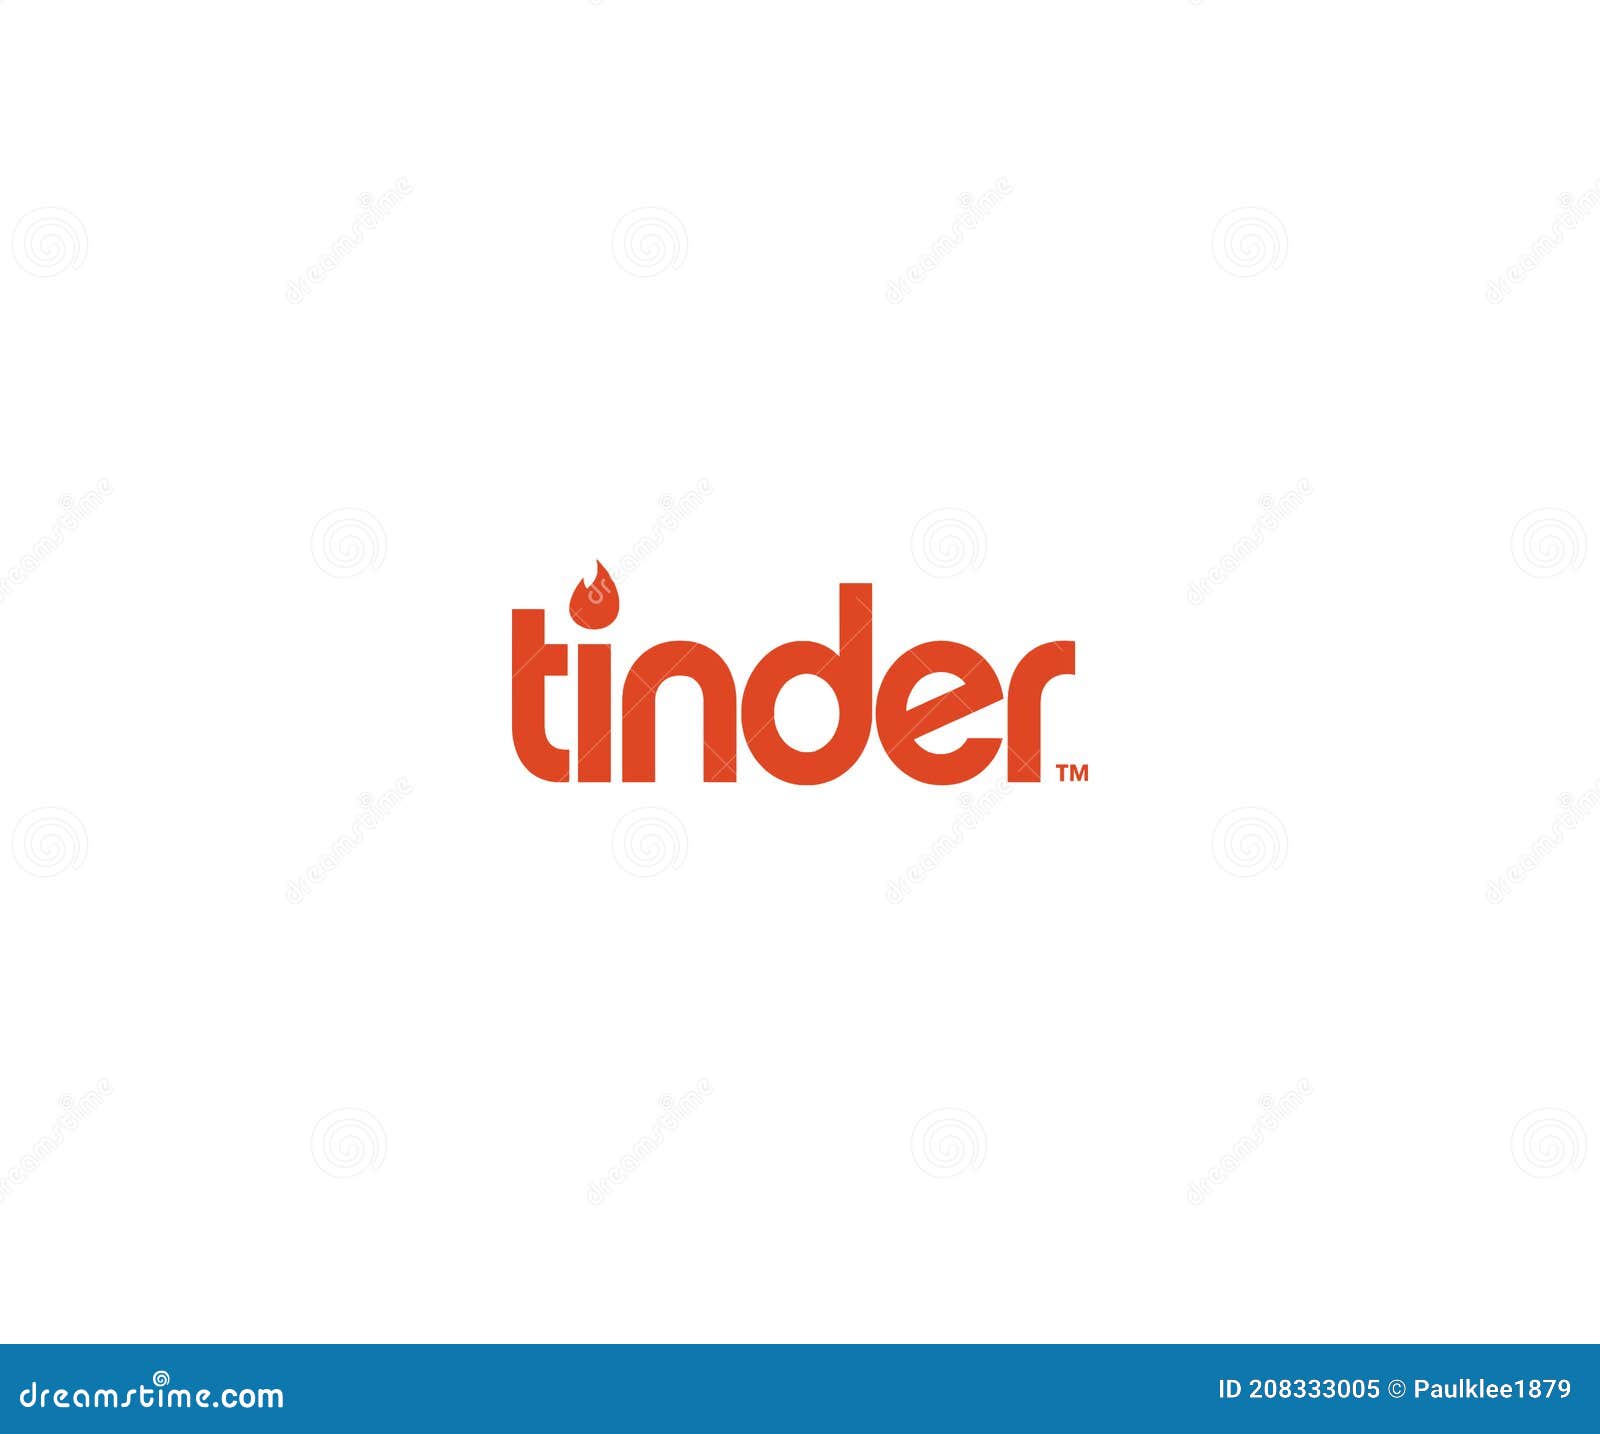 Tinder logo font